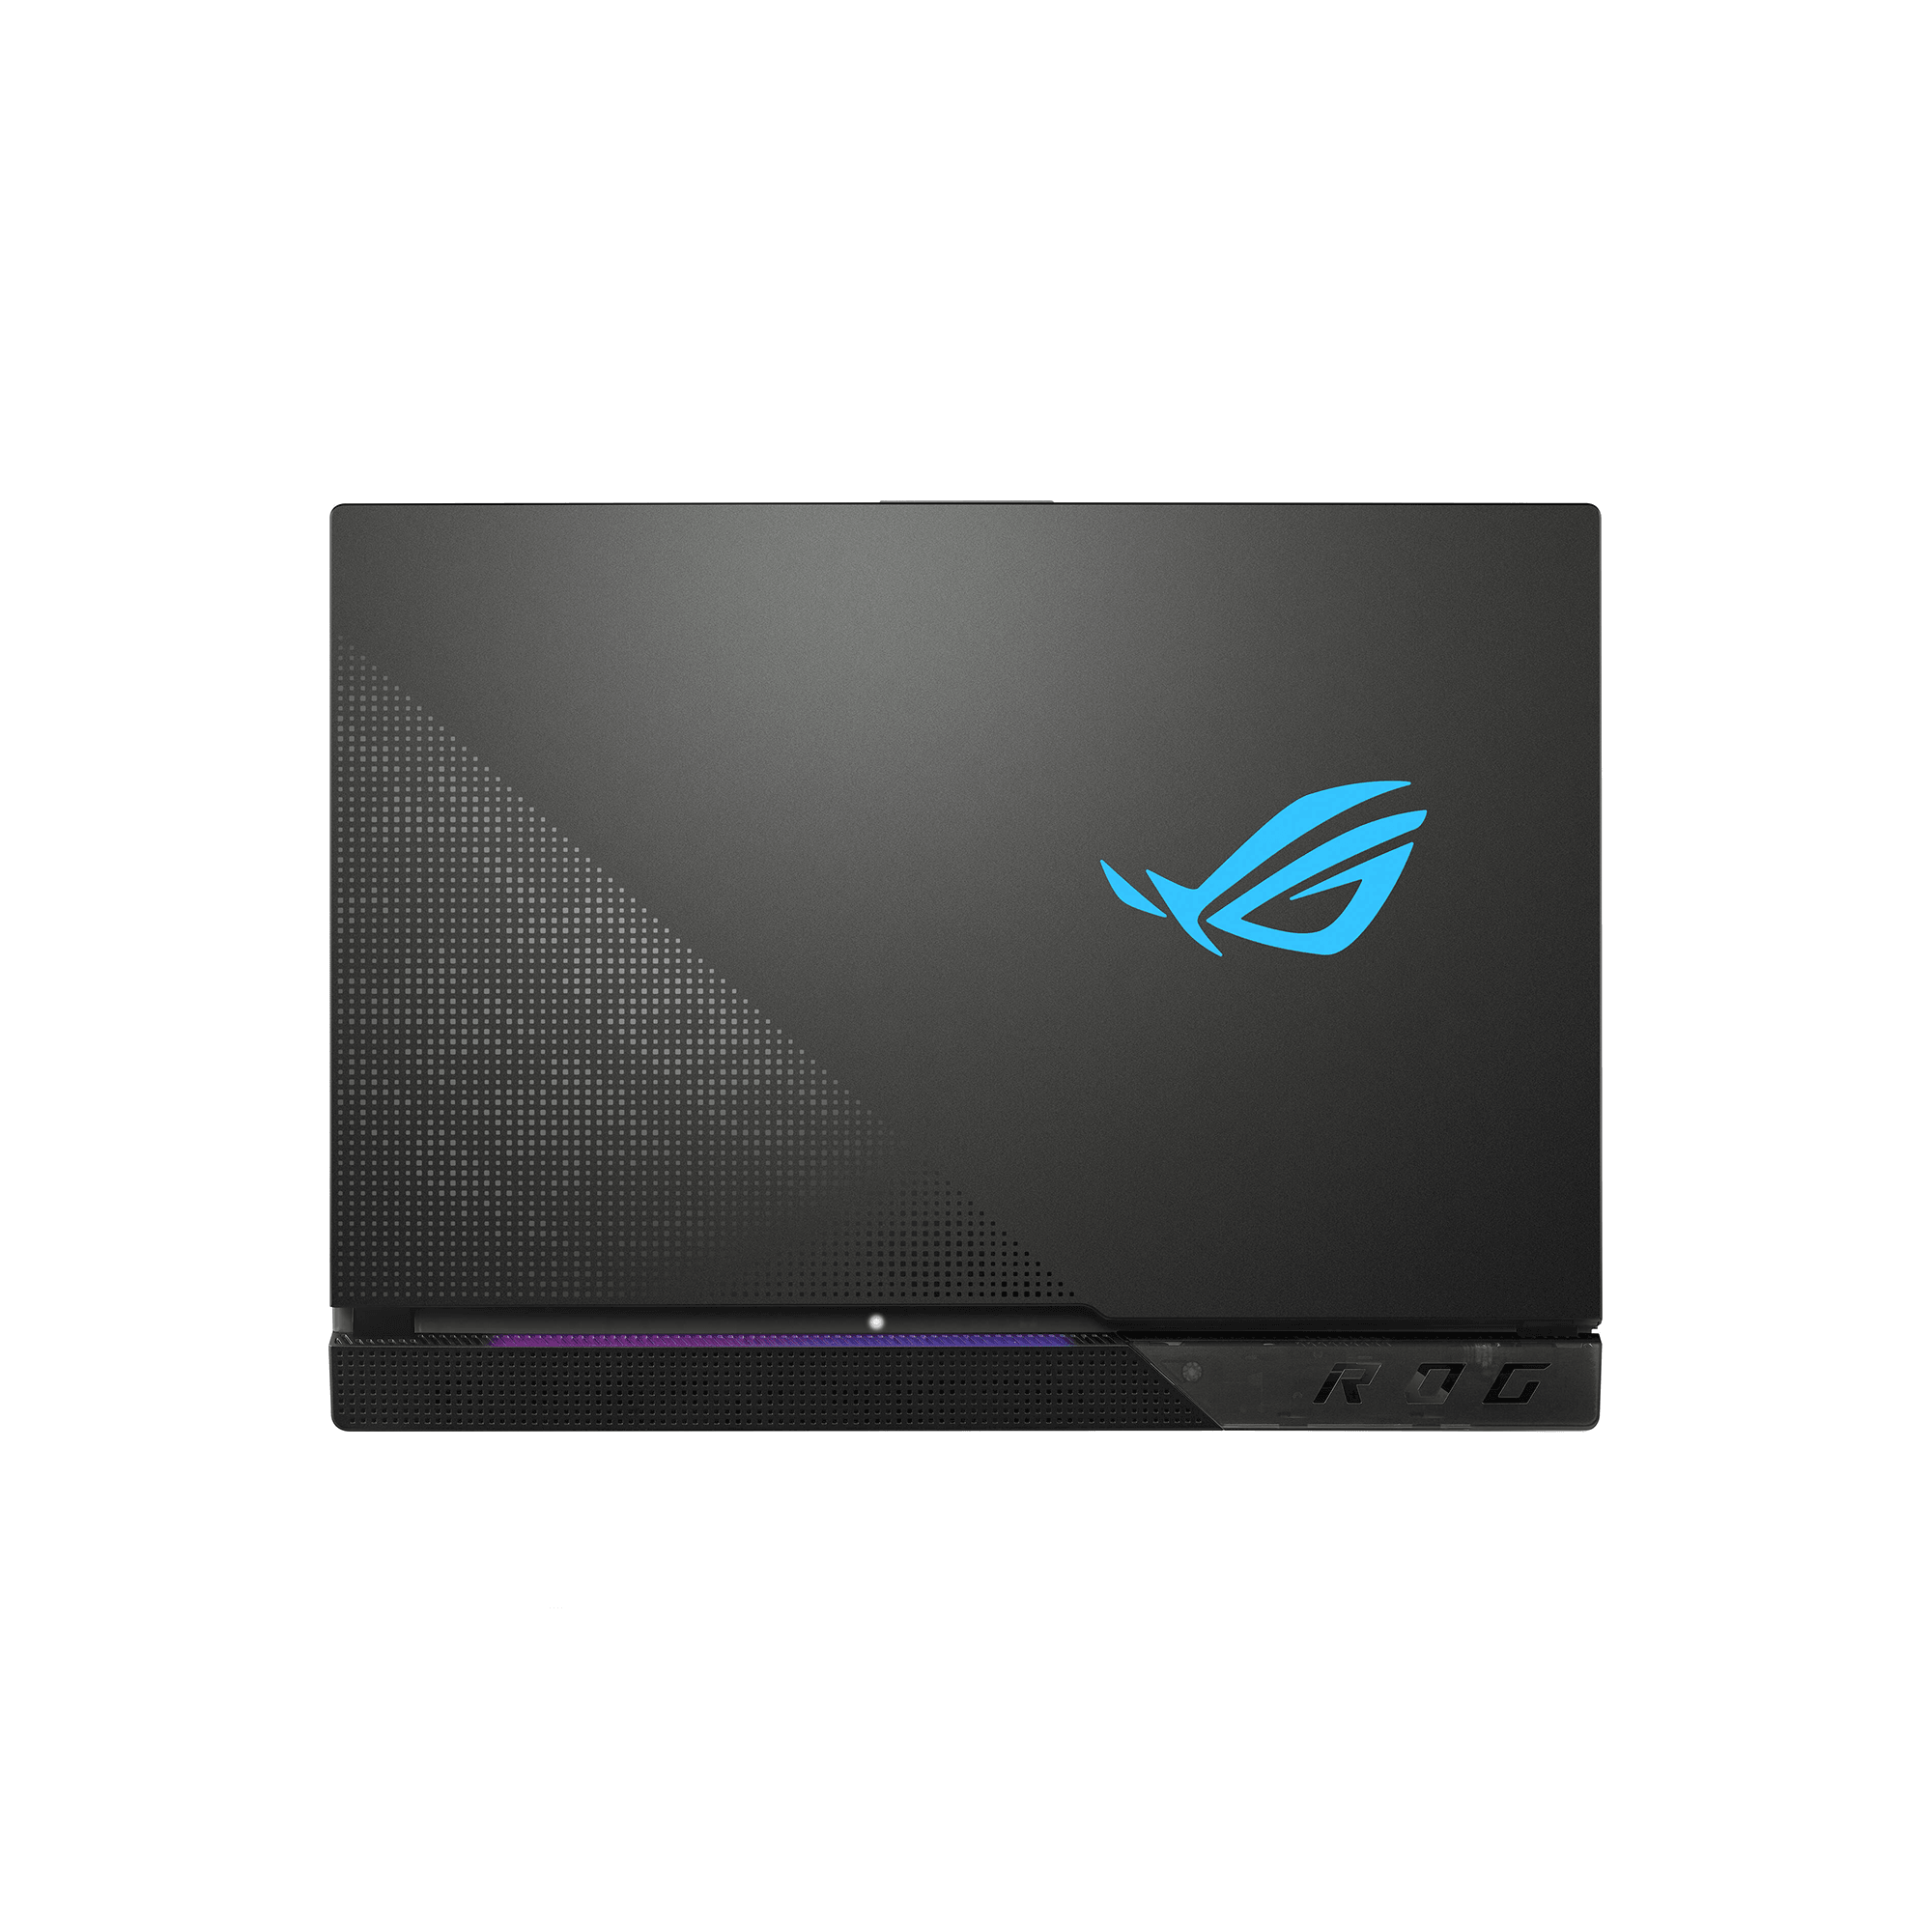 Asus Rog Strix Scar 15 Gaming Laptop, AMD Ryzen 9 5900HX,15.6" FullHD, RTX 3080, Windows 11 Home